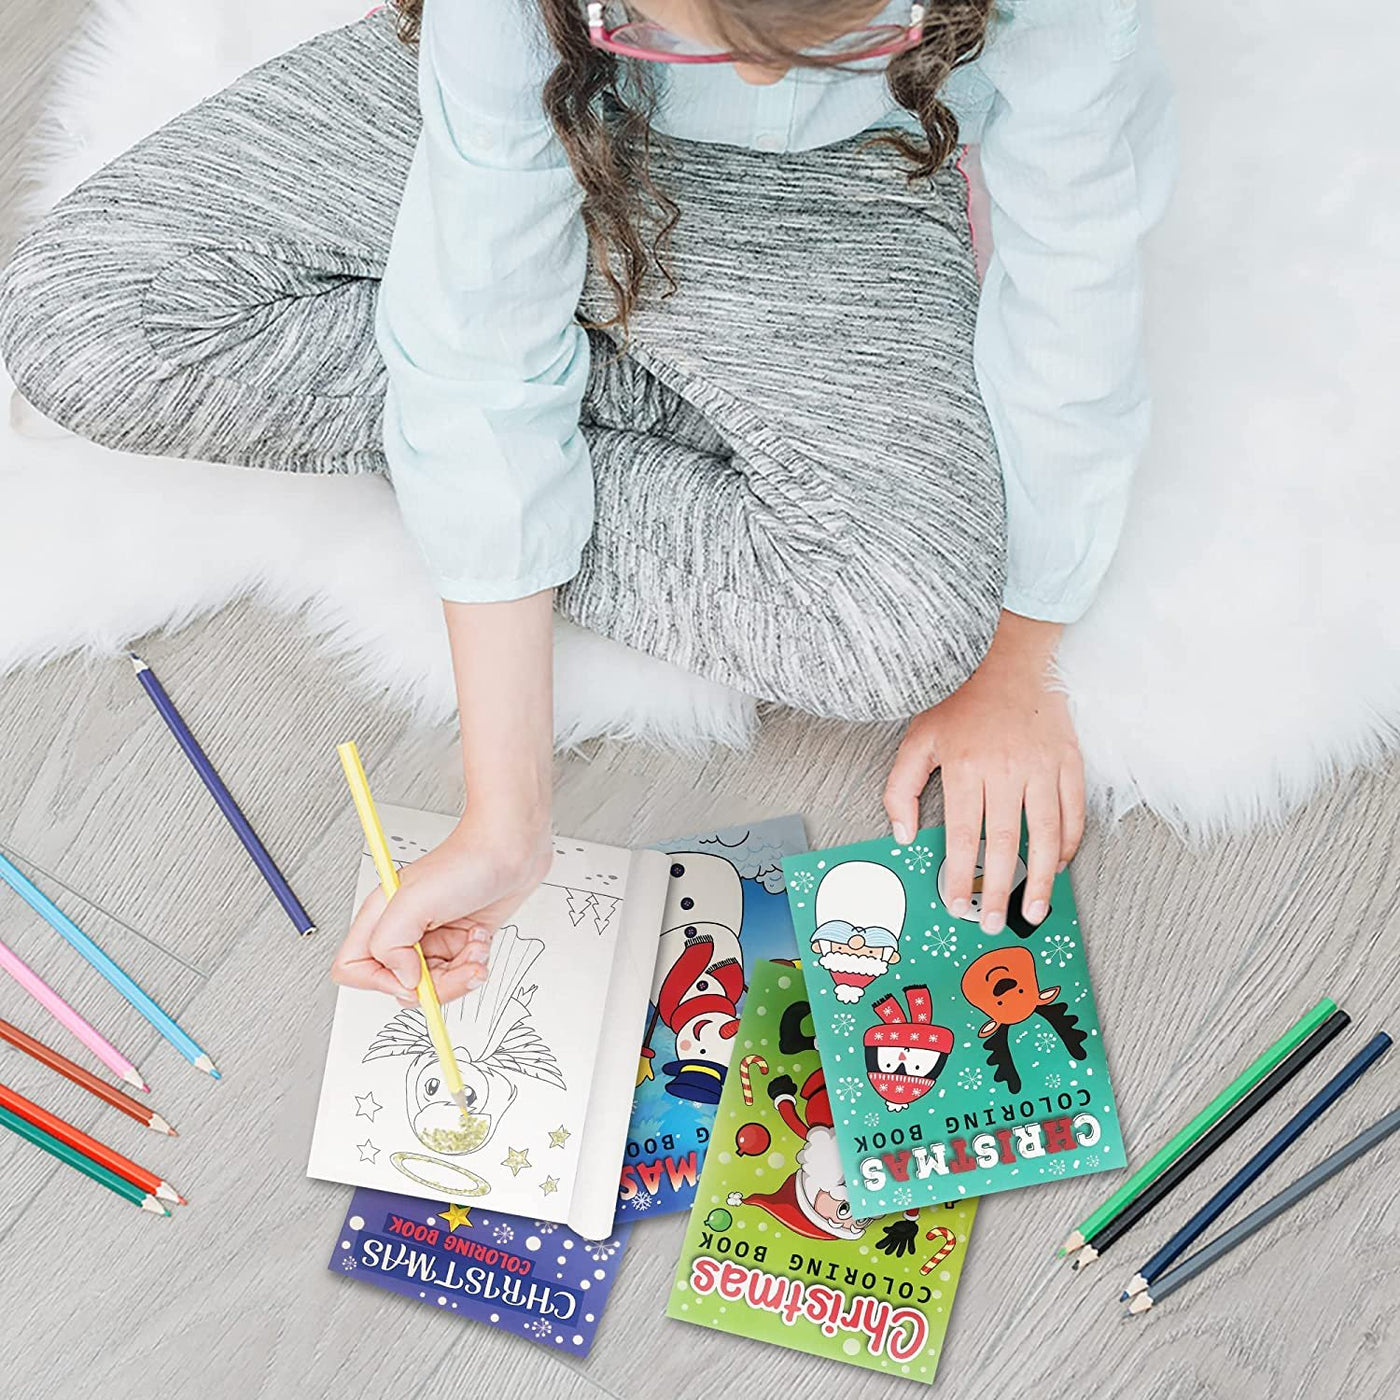 Christmas Coloring Books For Kids Bulk: Christmas Book, Easy and